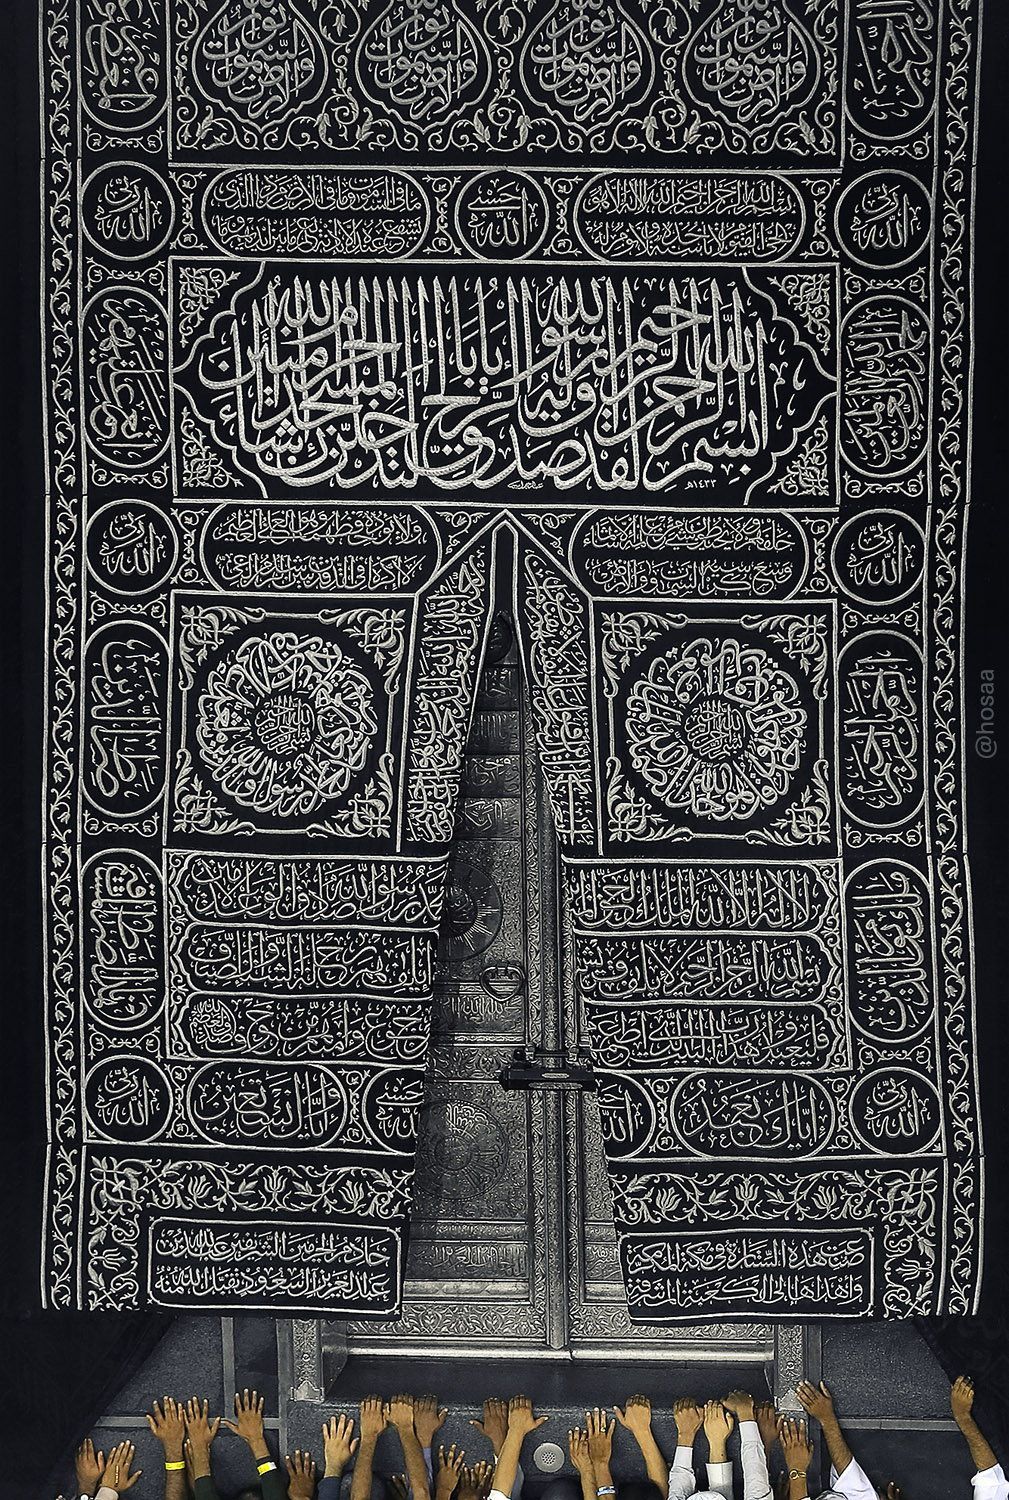 Kaaba Door Prayers by hosain Daghriri on 500px. Mekah, Mesjid